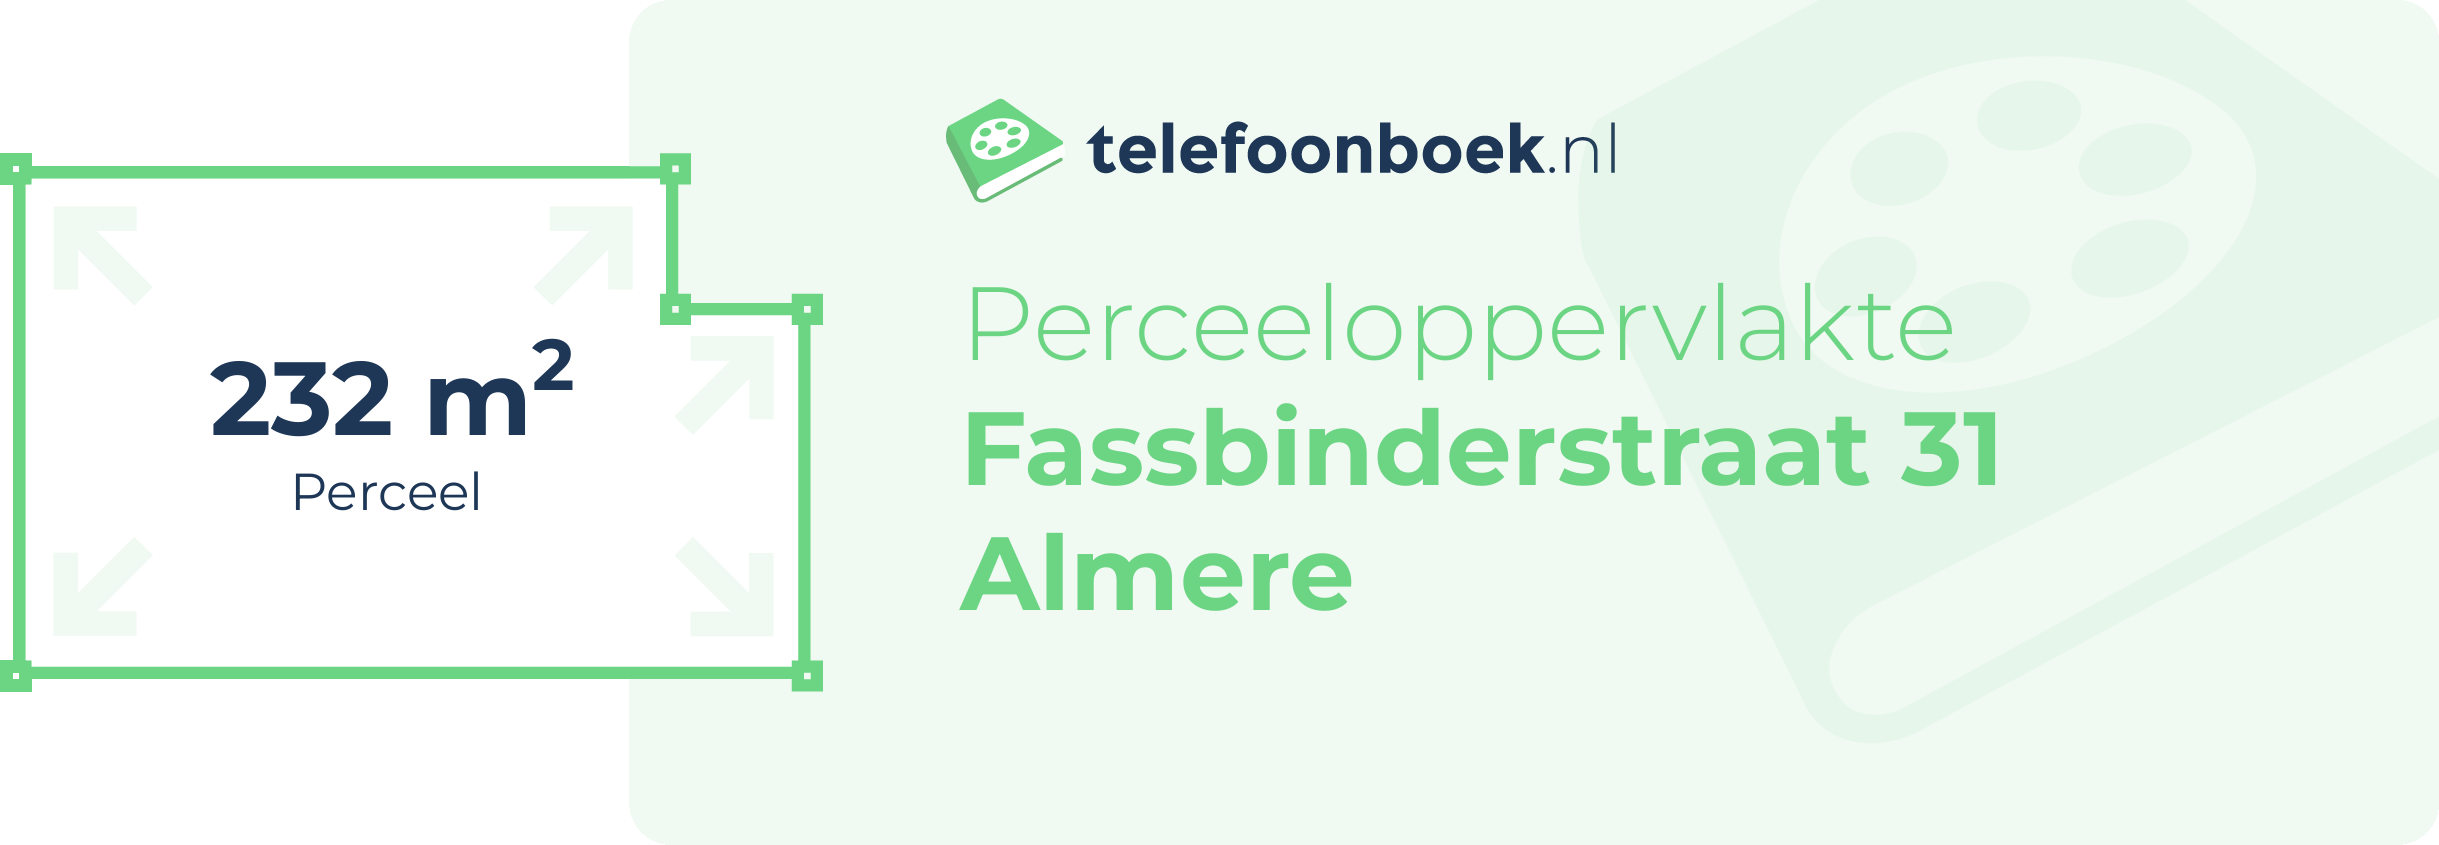 Perceeloppervlakte Fassbinderstraat 31 Almere